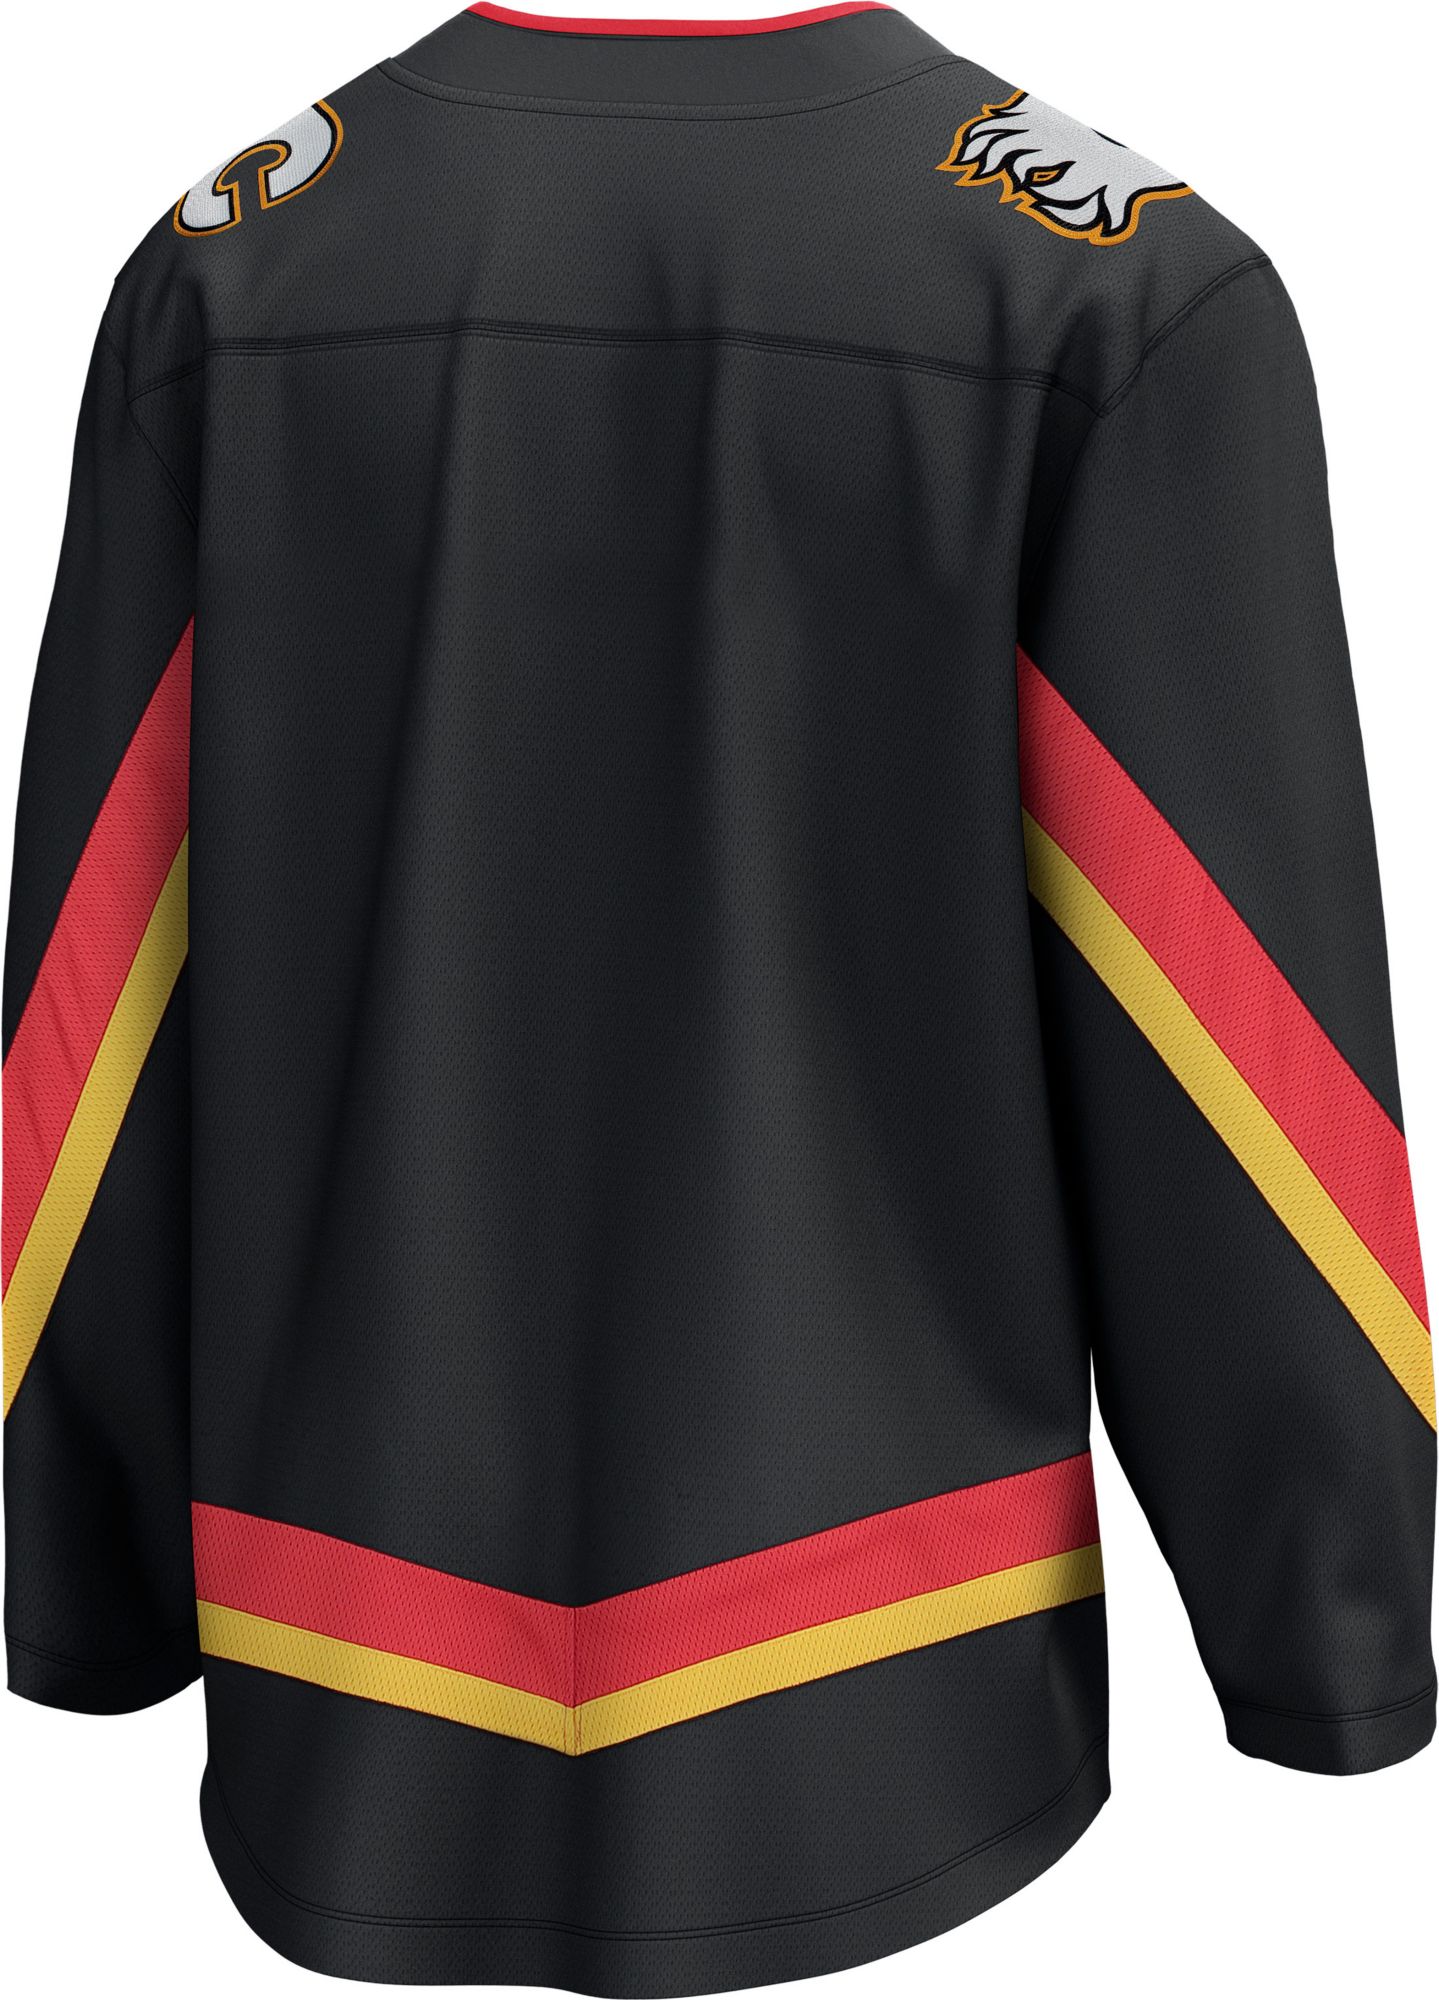 calgary flames jersey black